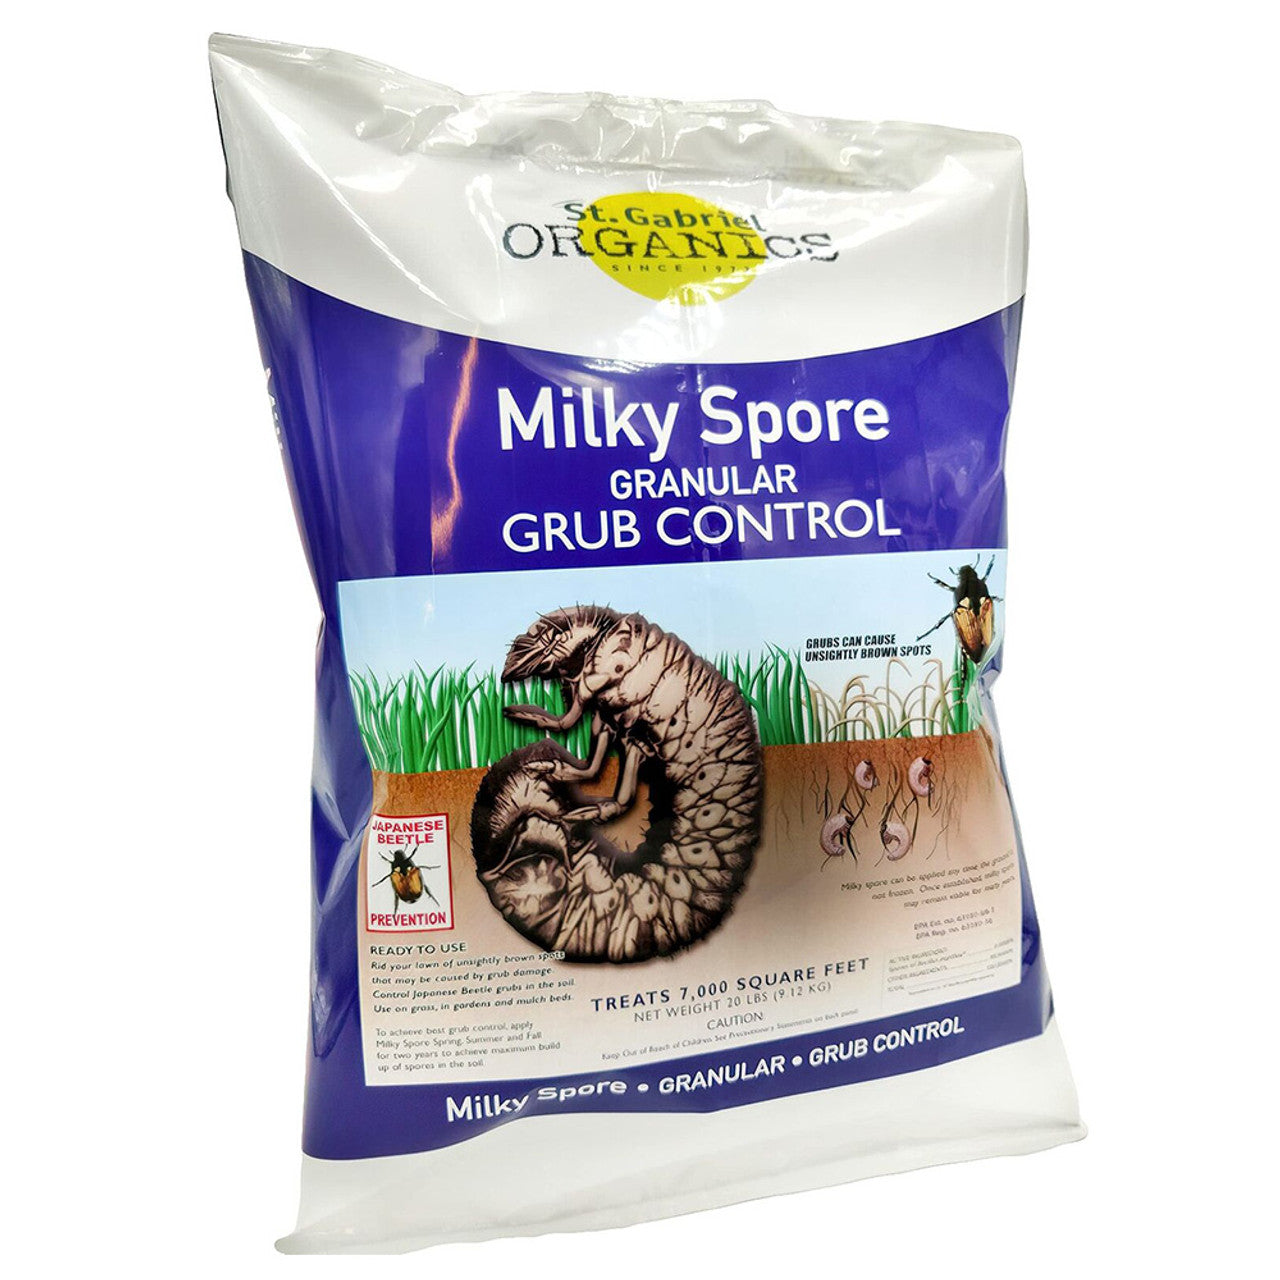 Milky Spore